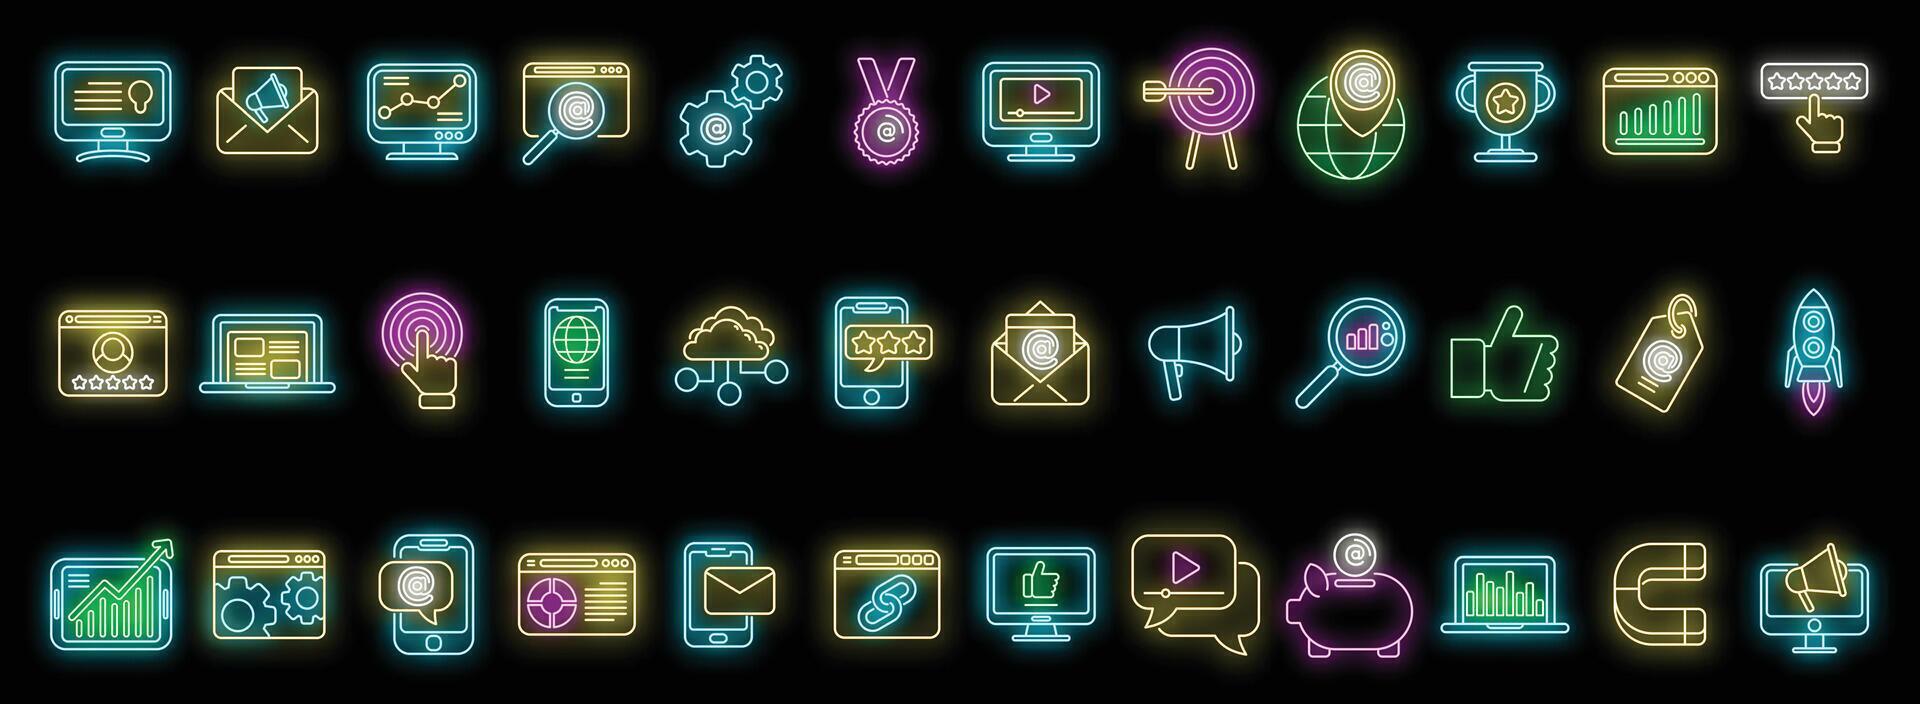 Online marketing icons set vector neon